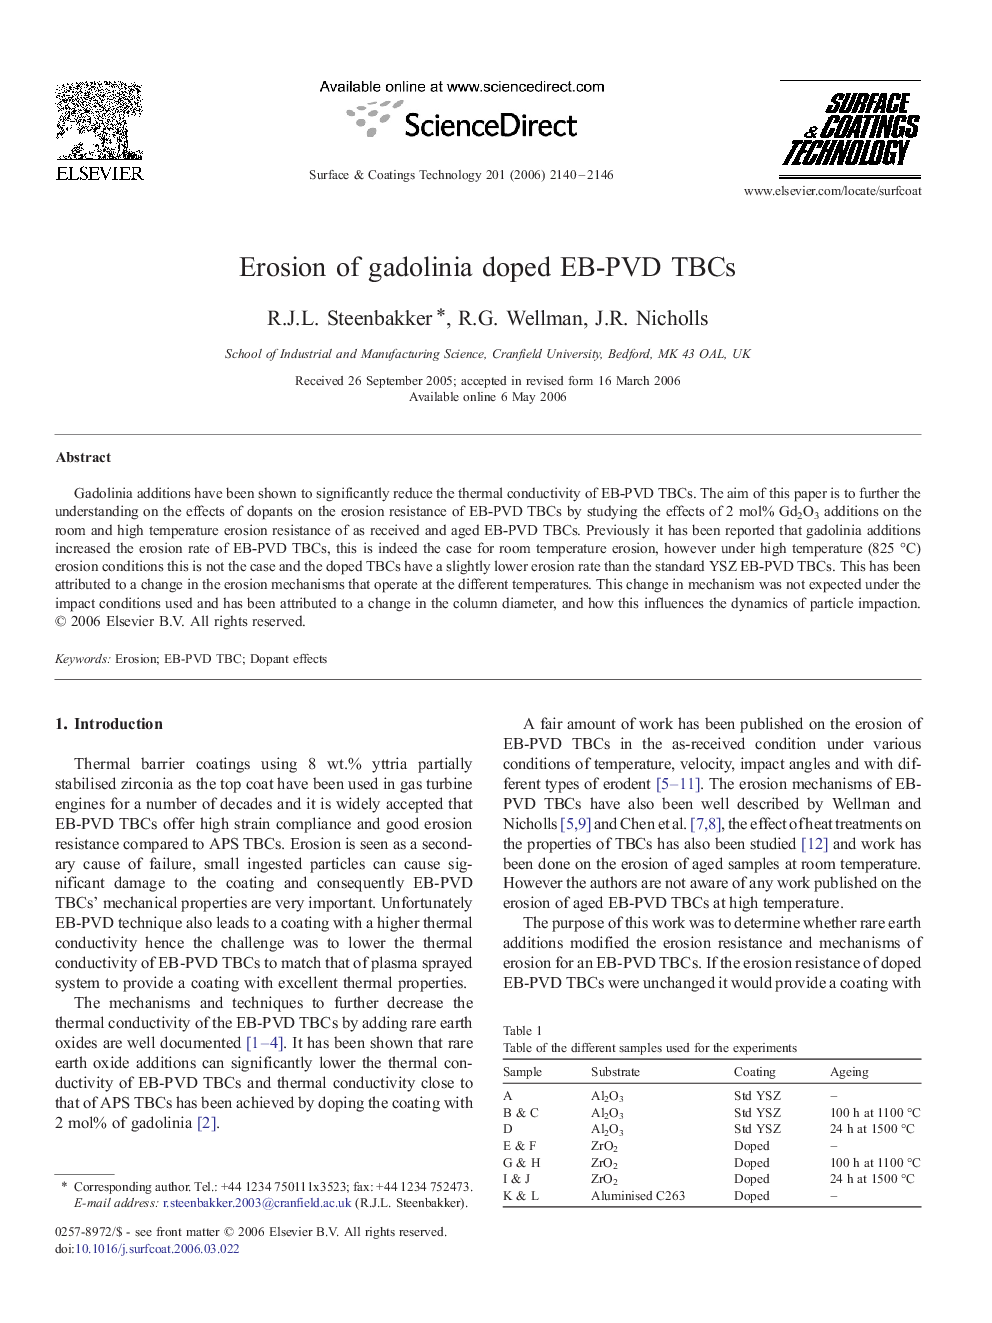 Erosion of gadolinia doped EB-PVD TBCs